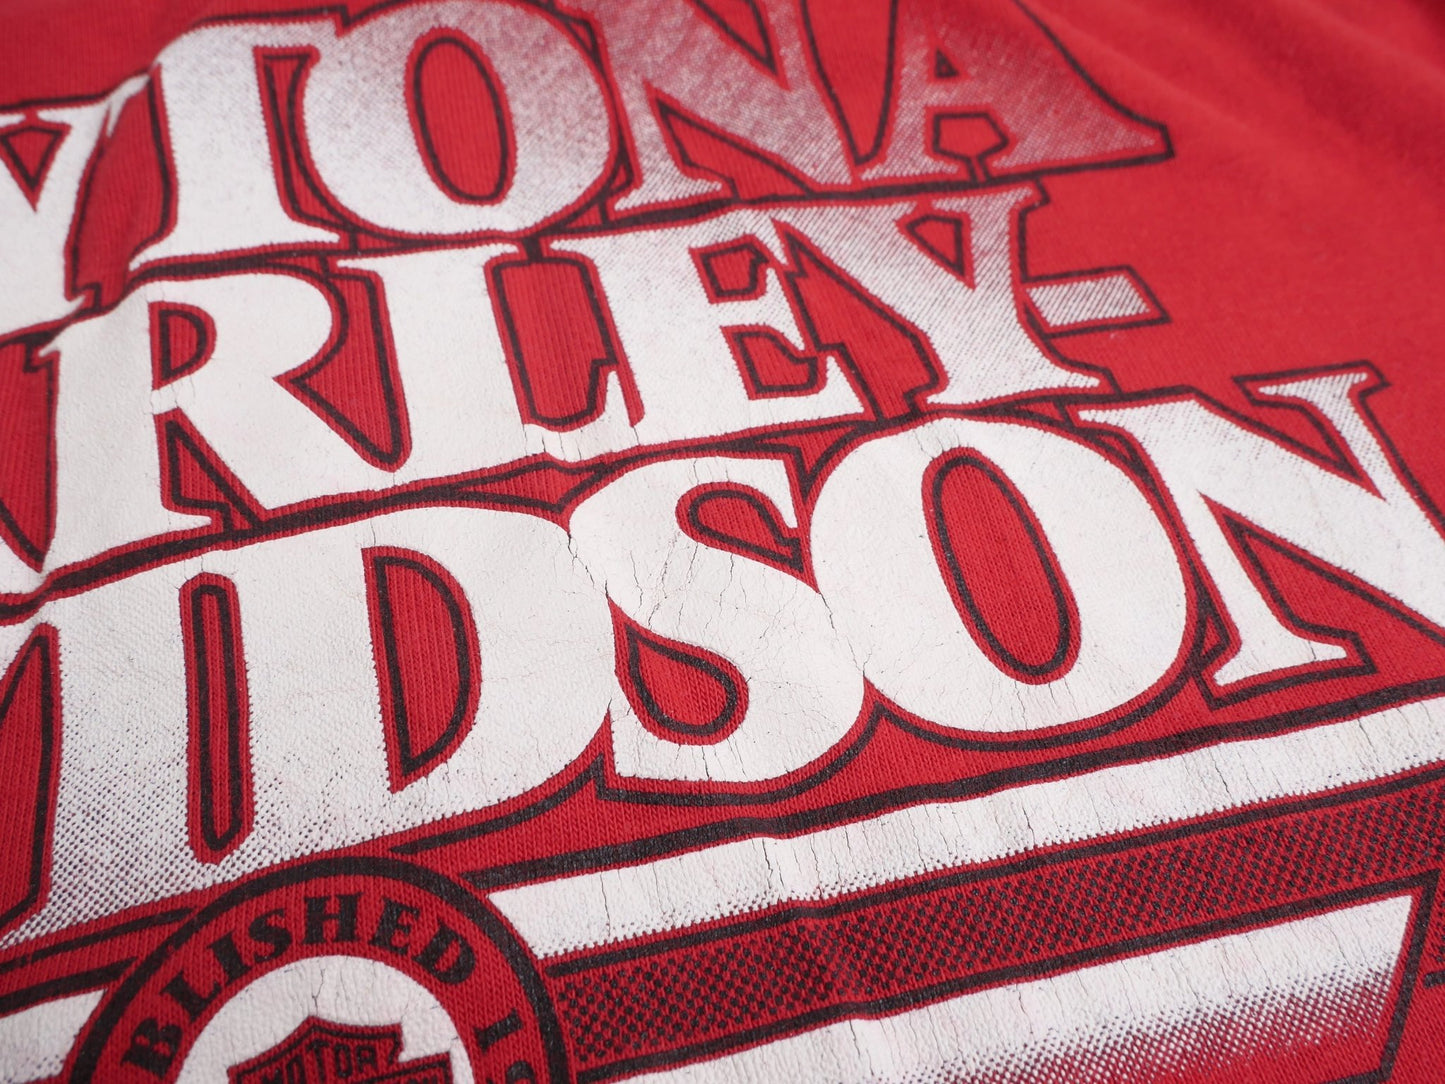 Harley Davidson printed Florida red Polo Shirt - Peeces